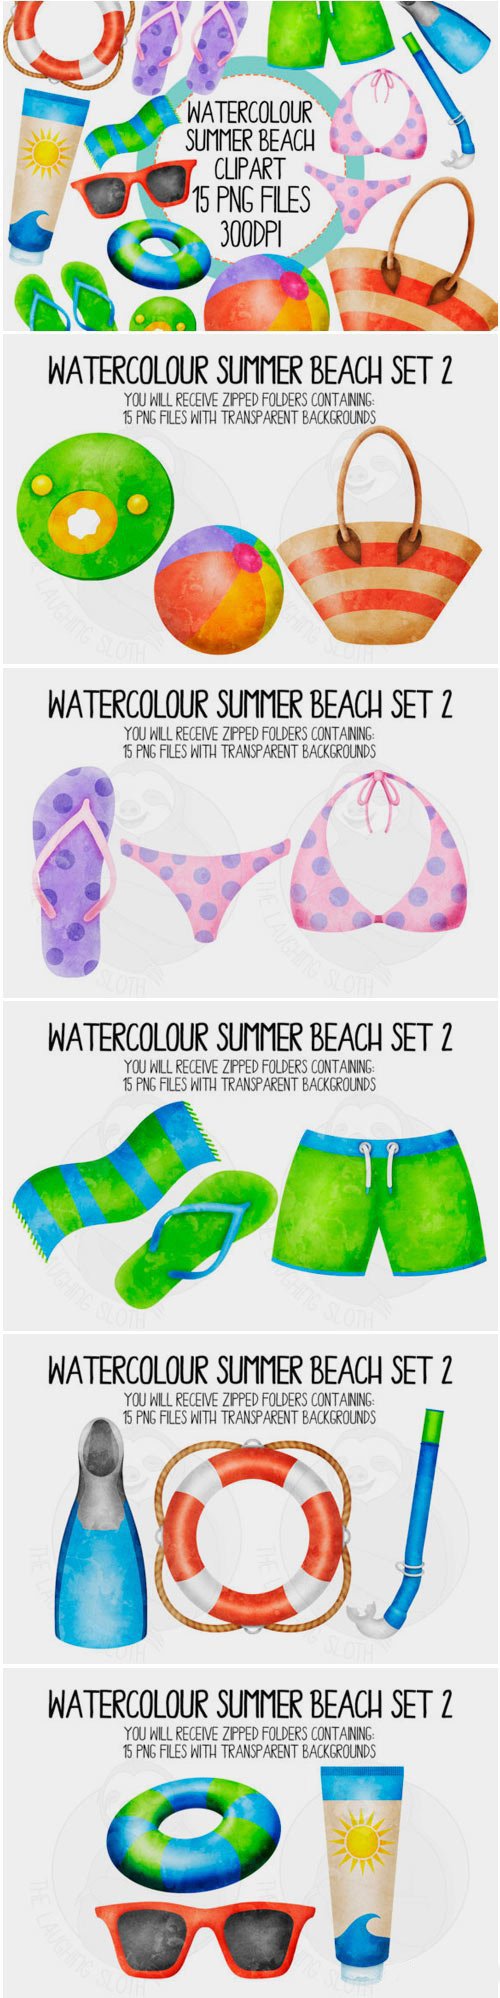 Watercolour Summer Beach Set 2 1575861